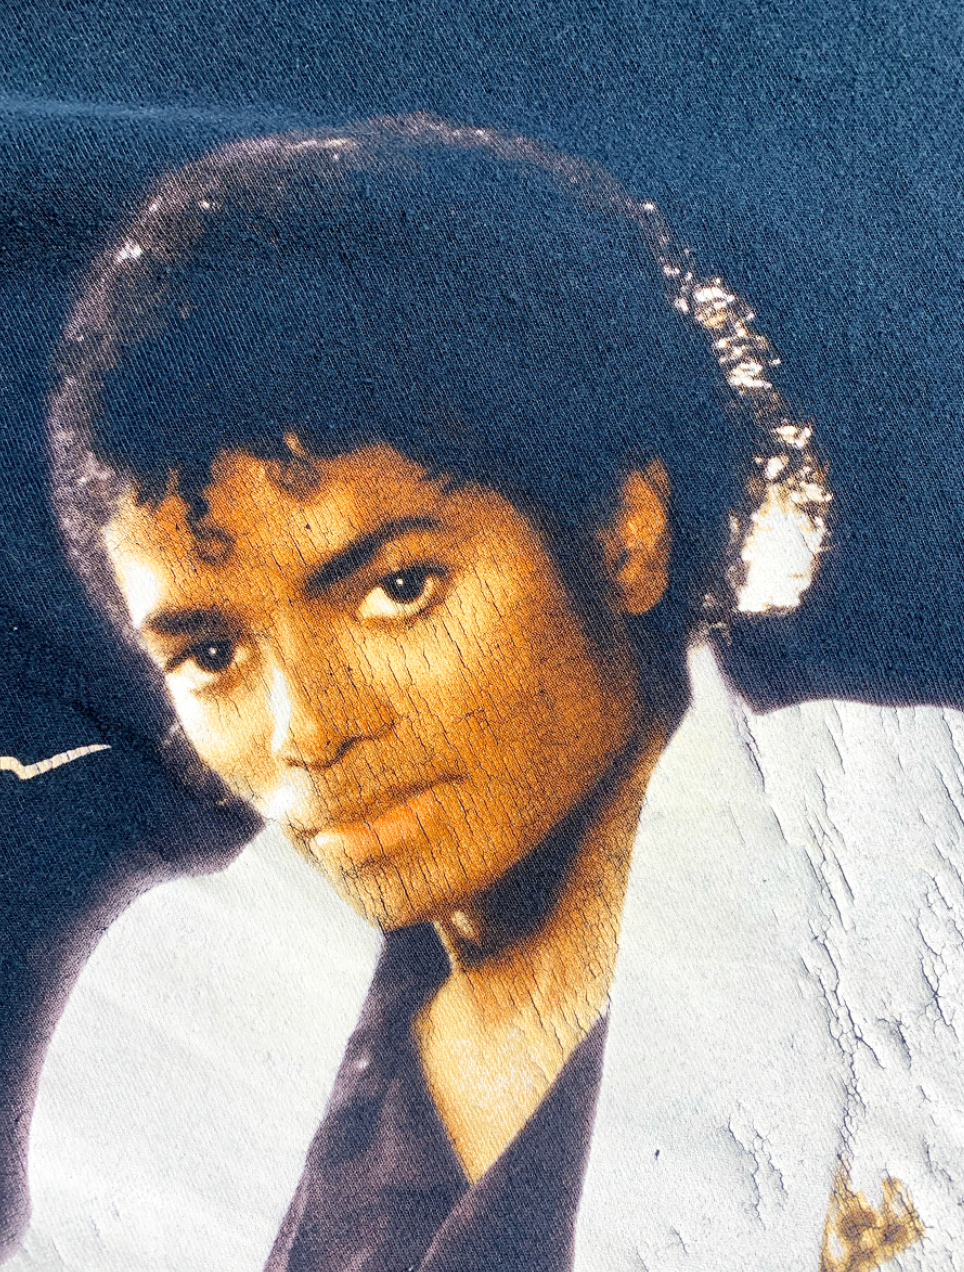 Michael Jackson Thriller - New Vintage Band T shirt - Vintage Band